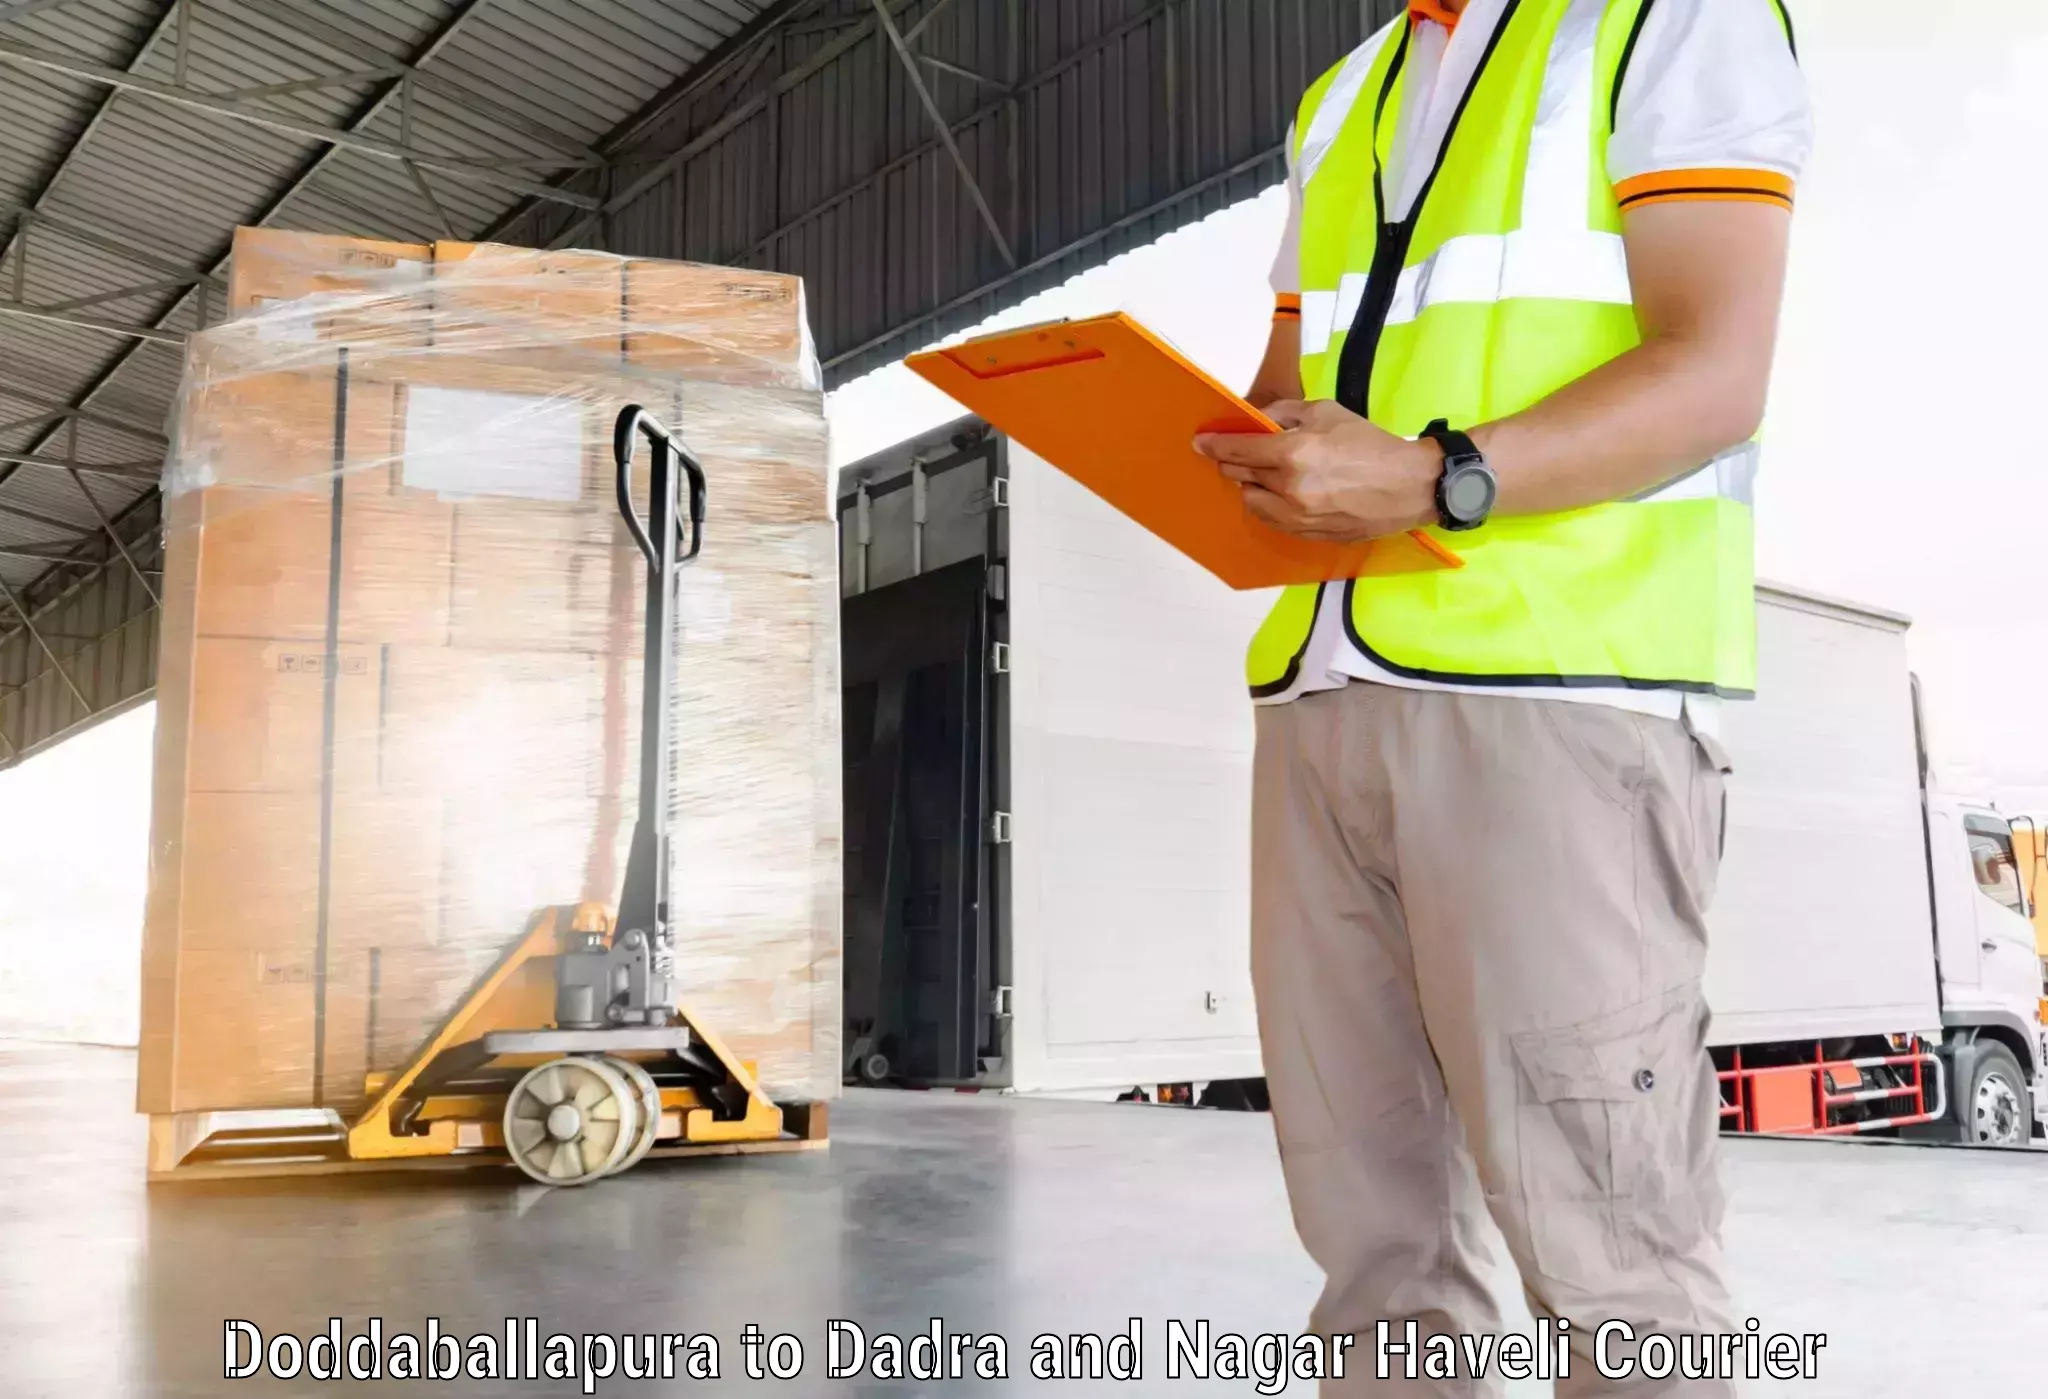 Logistics service provider Doddaballapura to Silvassa